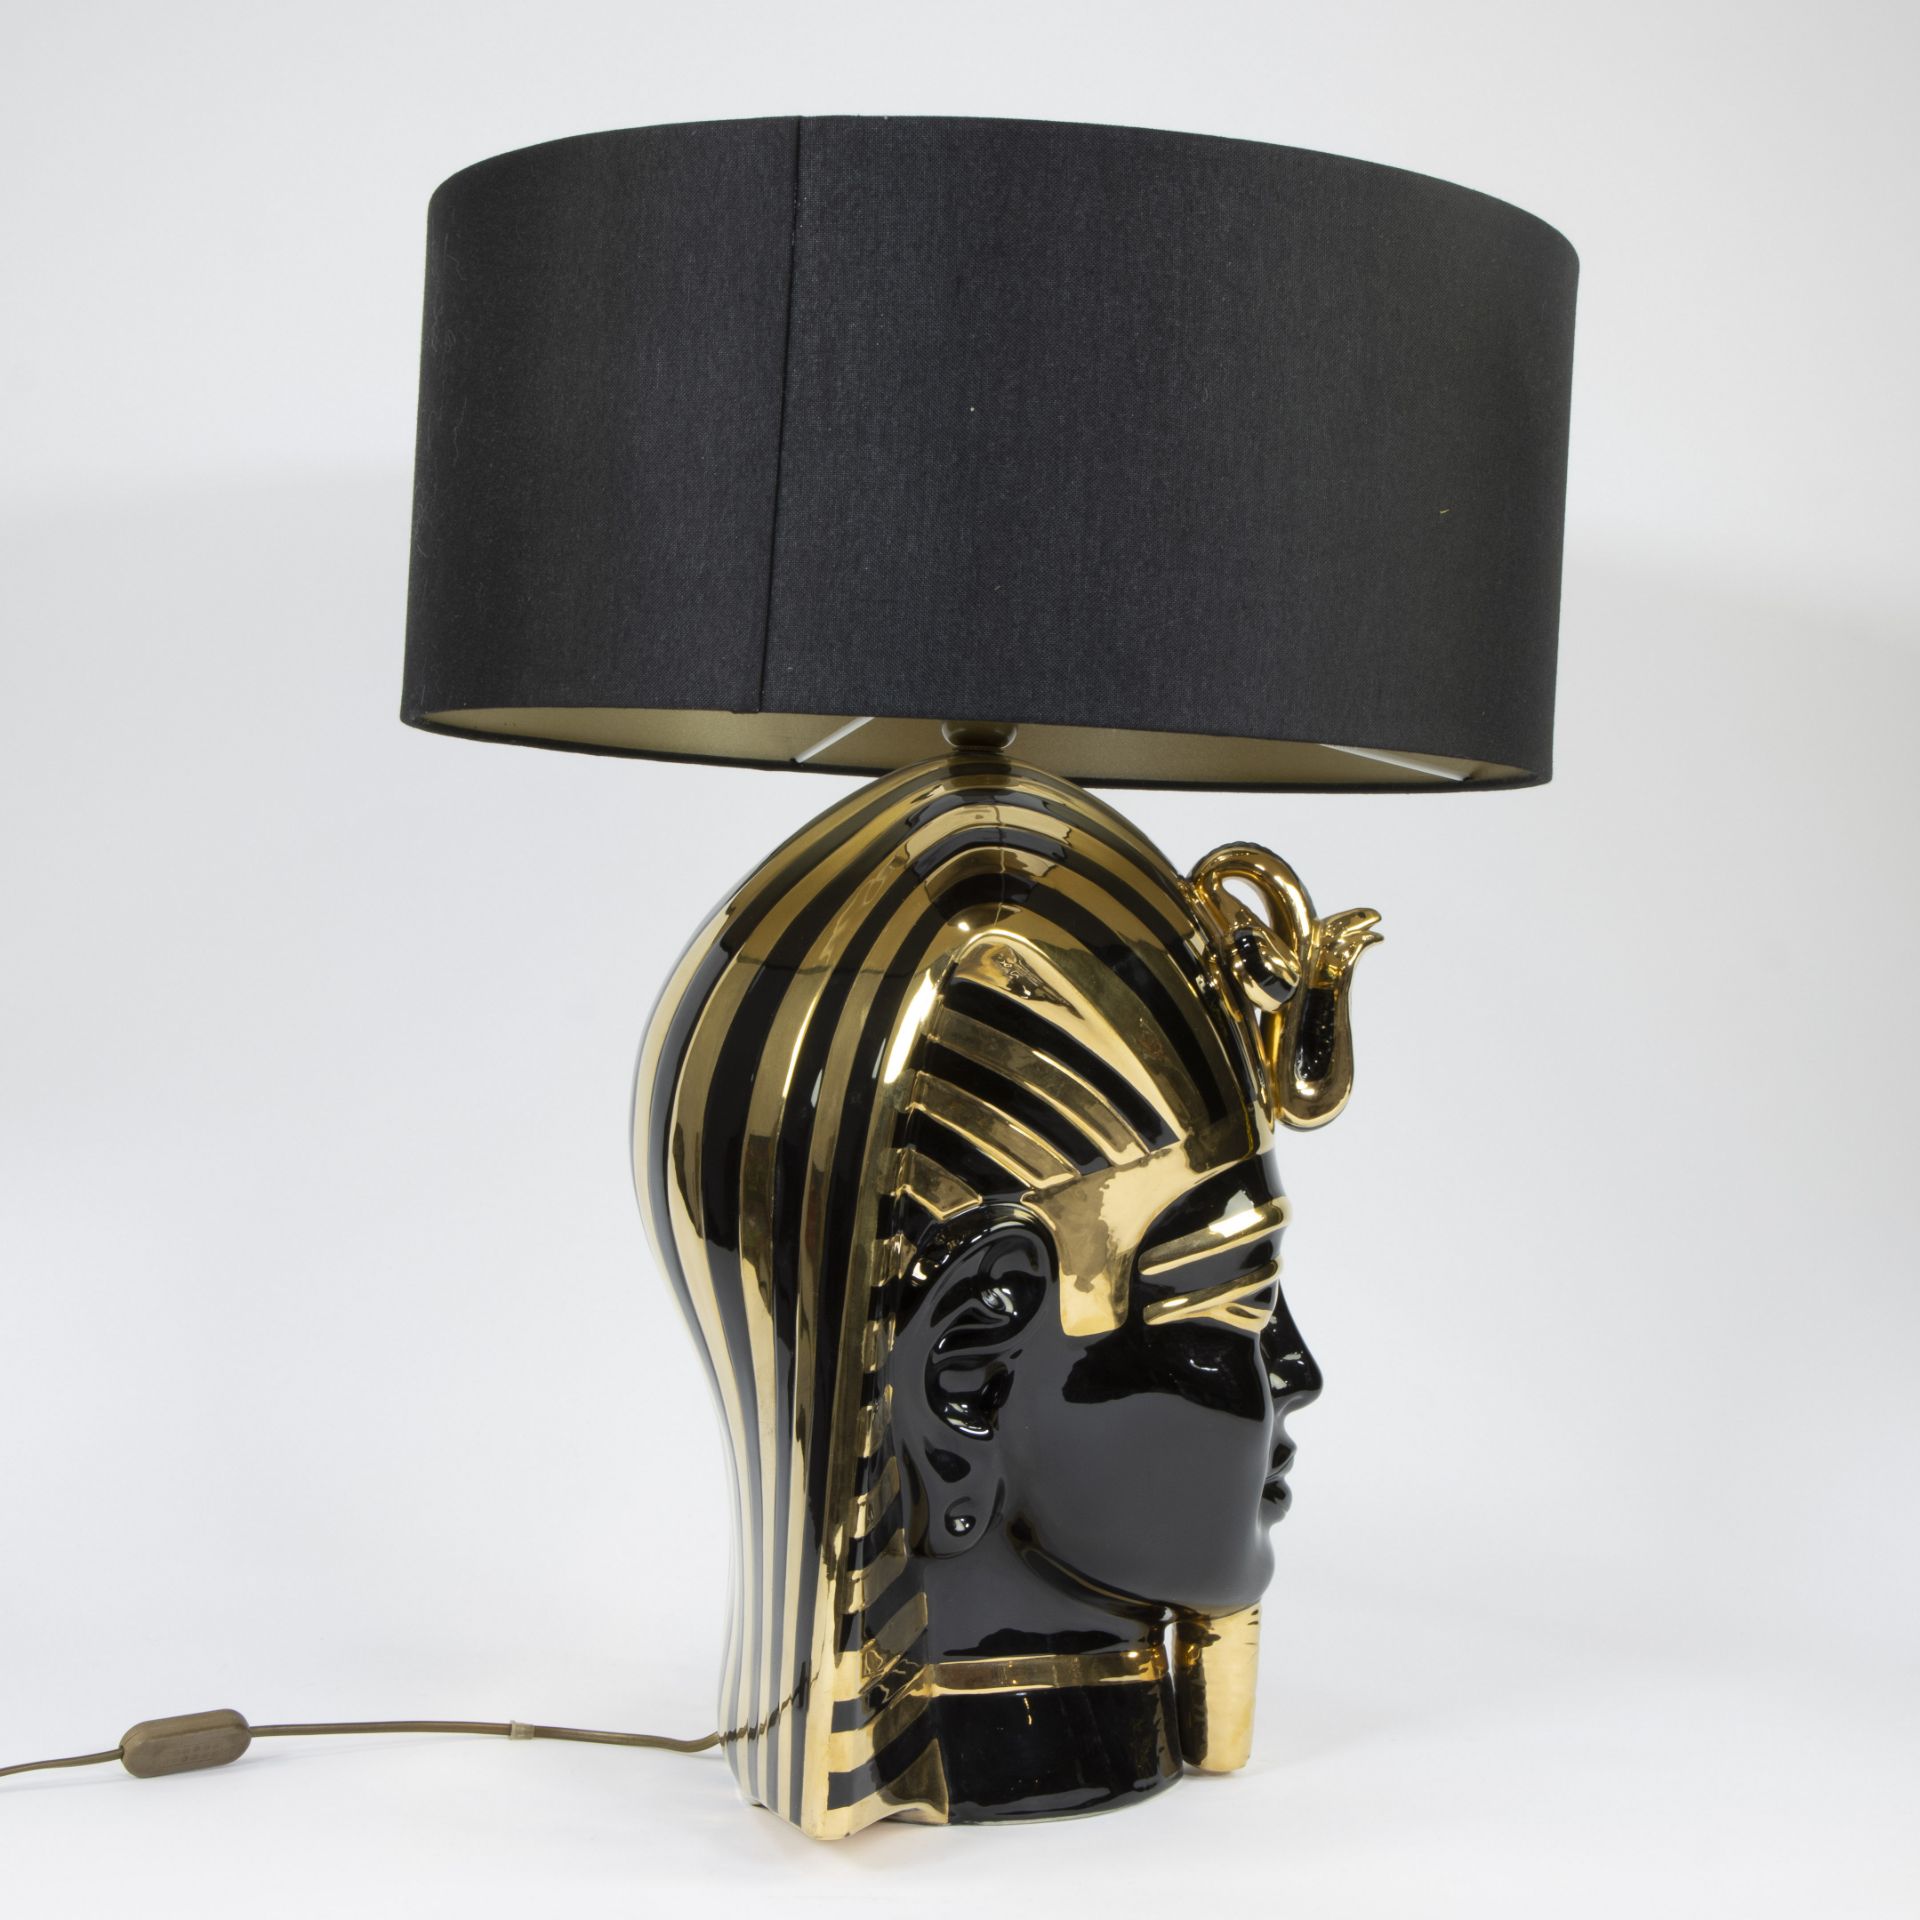 1970s Tutankhamun black enamelled ceramic table lamp decorated with gold - Image 4 of 4